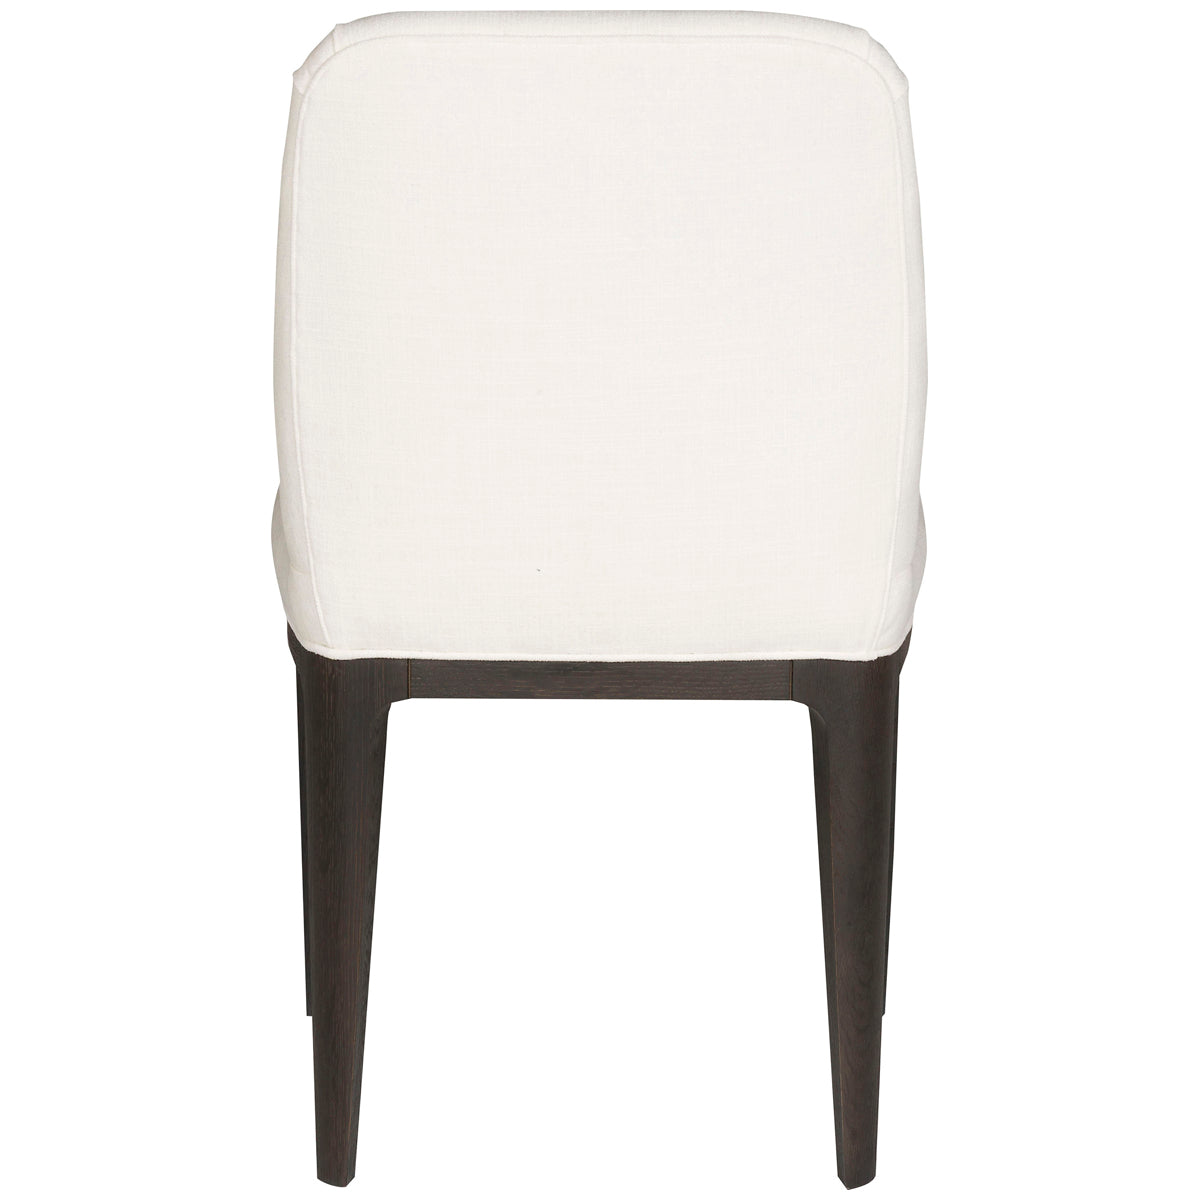 Vanguard Furniture Form Side Chair